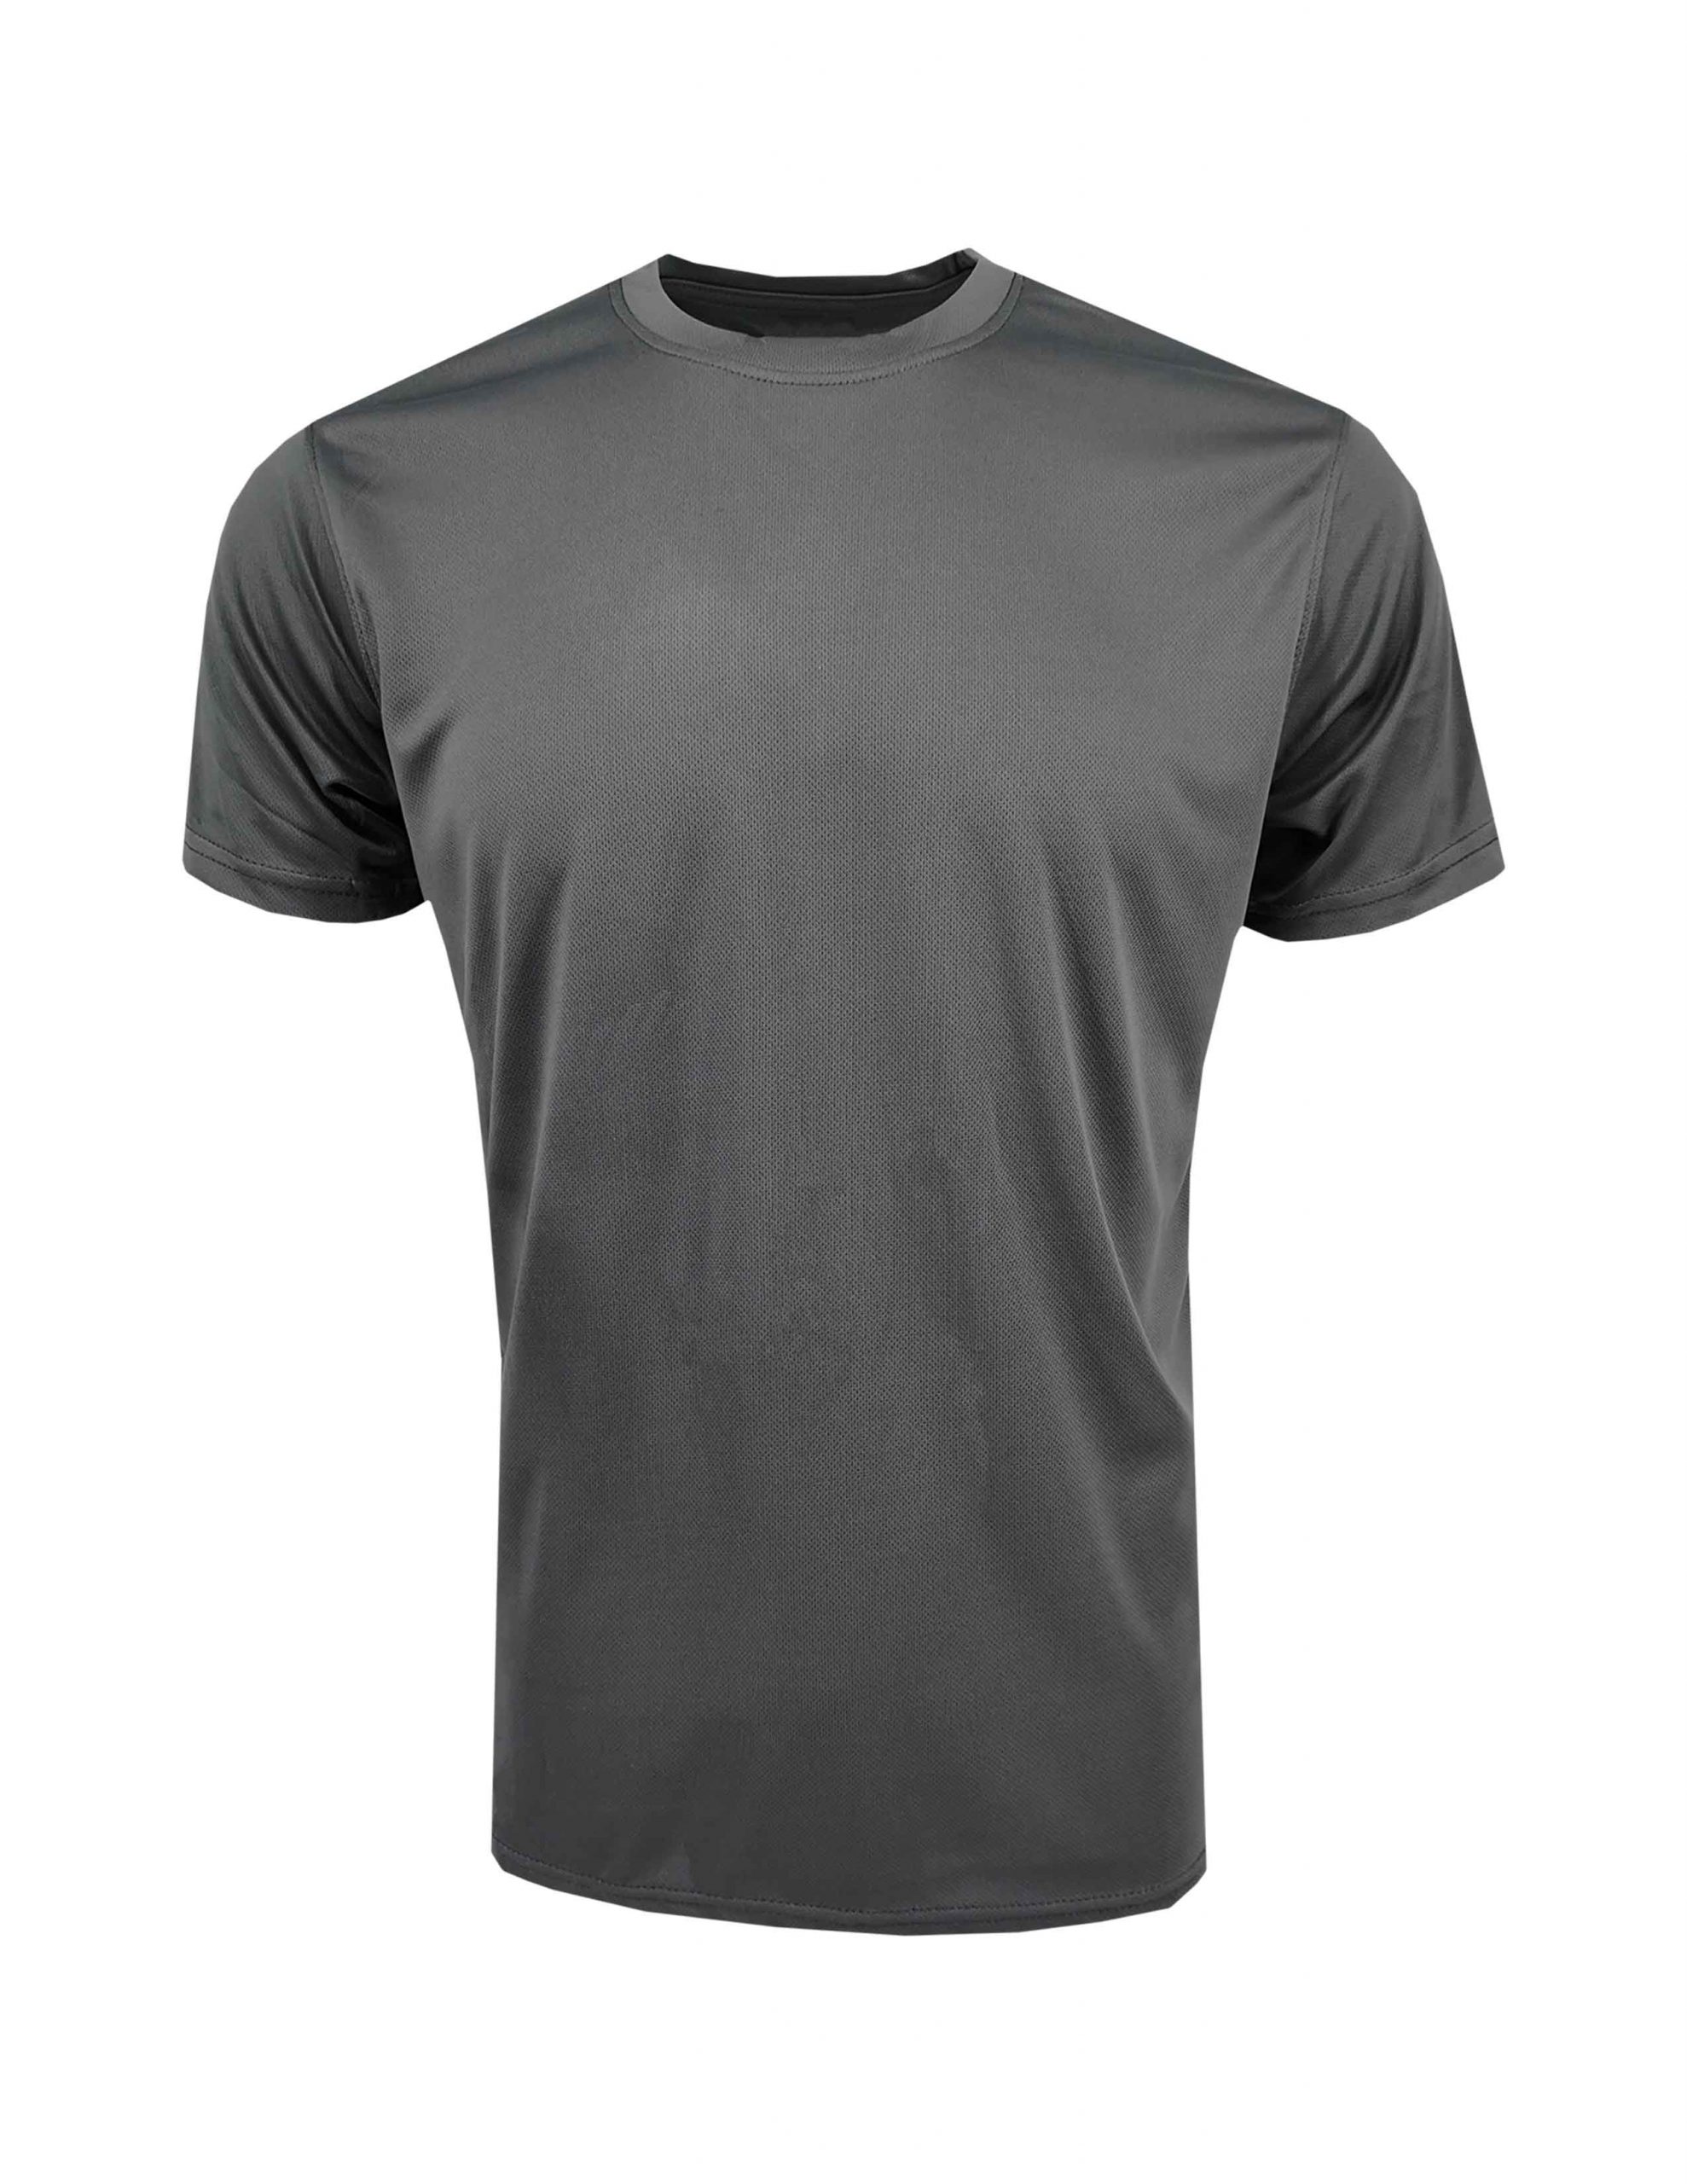 QDR 5124 Knight Grey - Rightway Basic T-Shirt | Basic T-Shirt Supplier ...